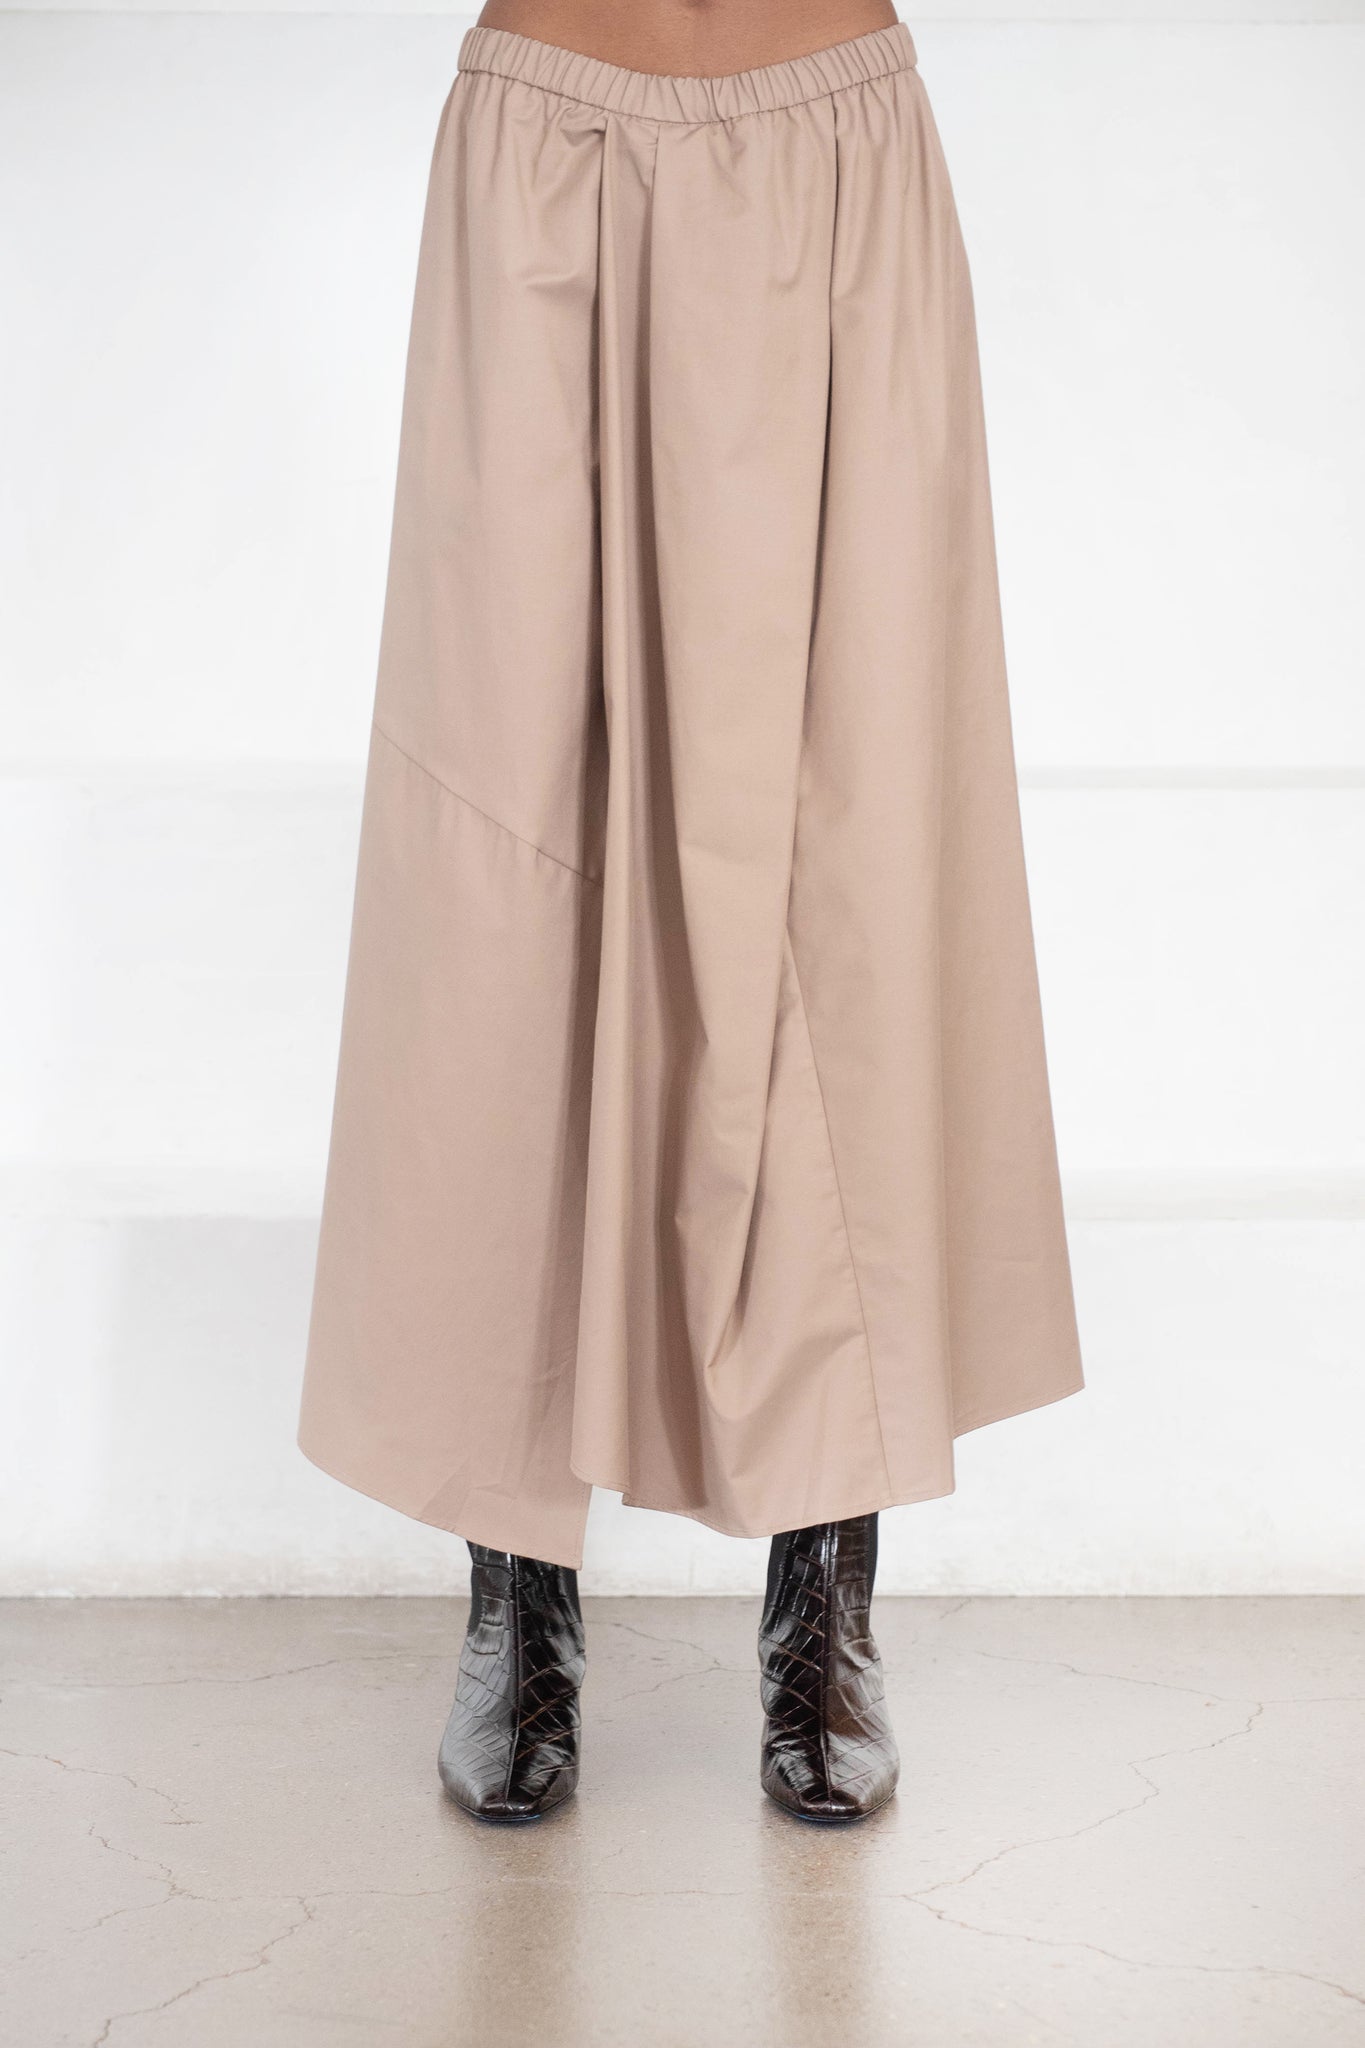 Christian Wijnants - Sonam Fluid Elastic Waistband Skirt, Sand